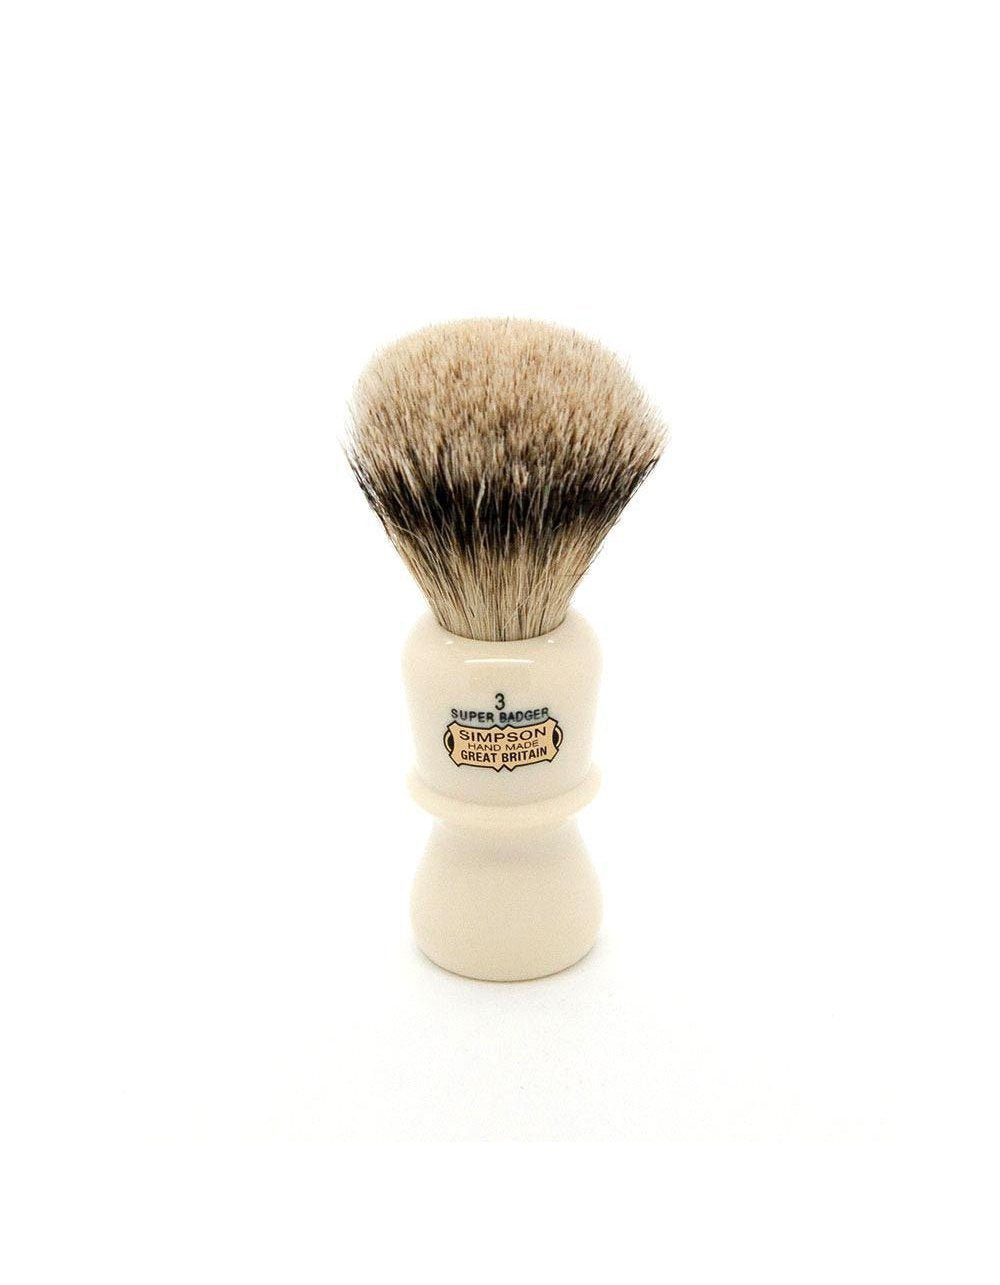 Product image 1 for Simpson Emperor 3 Super Badger Shaving Brush, Ivory